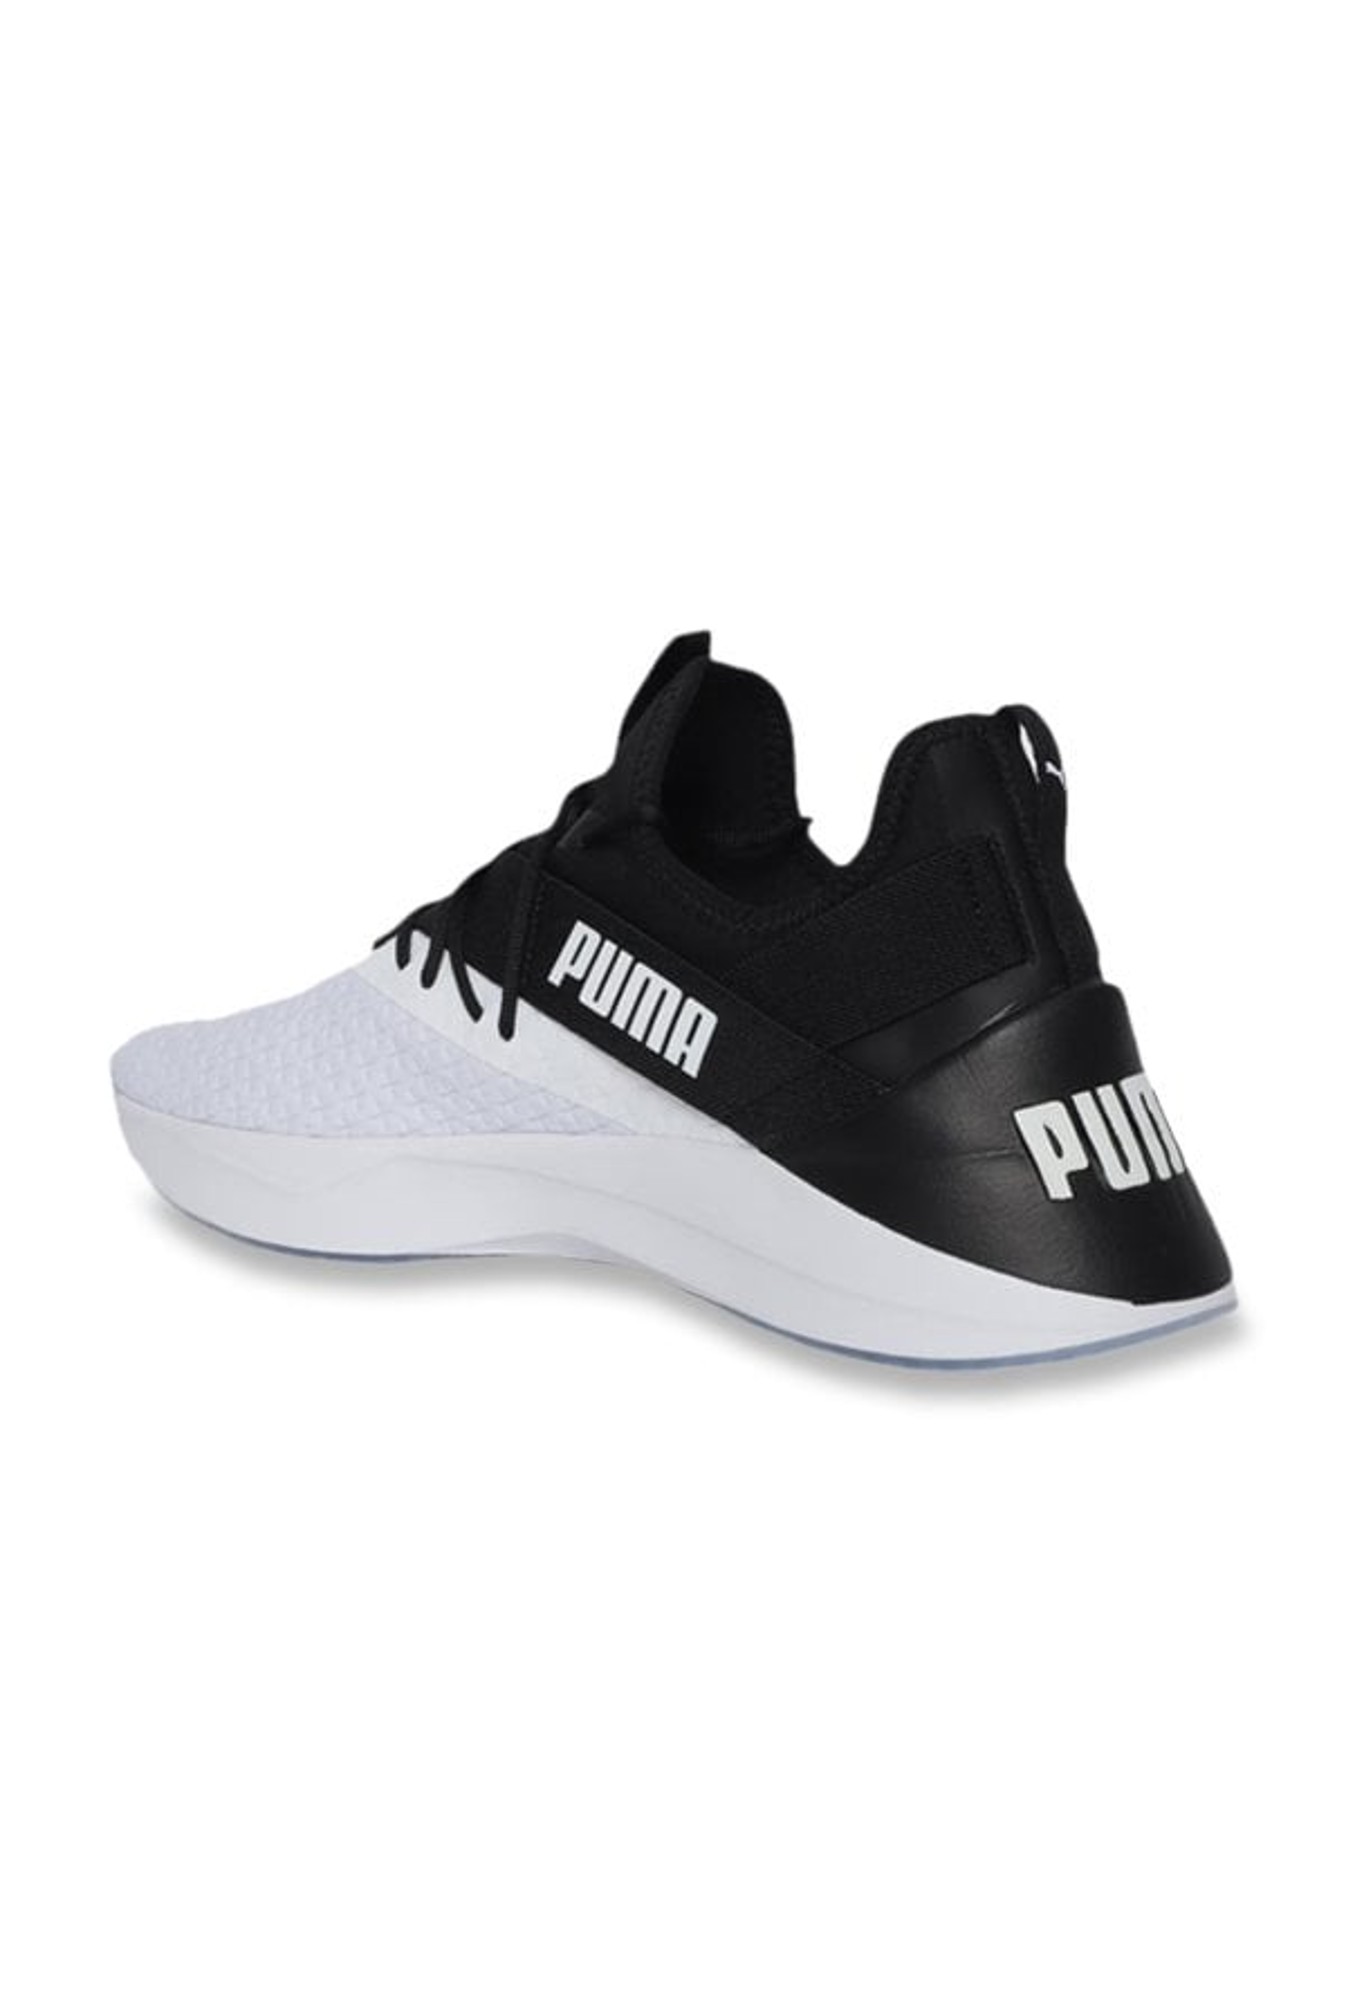 Buy Puma One8 Jaab XT White \u0026 Black 